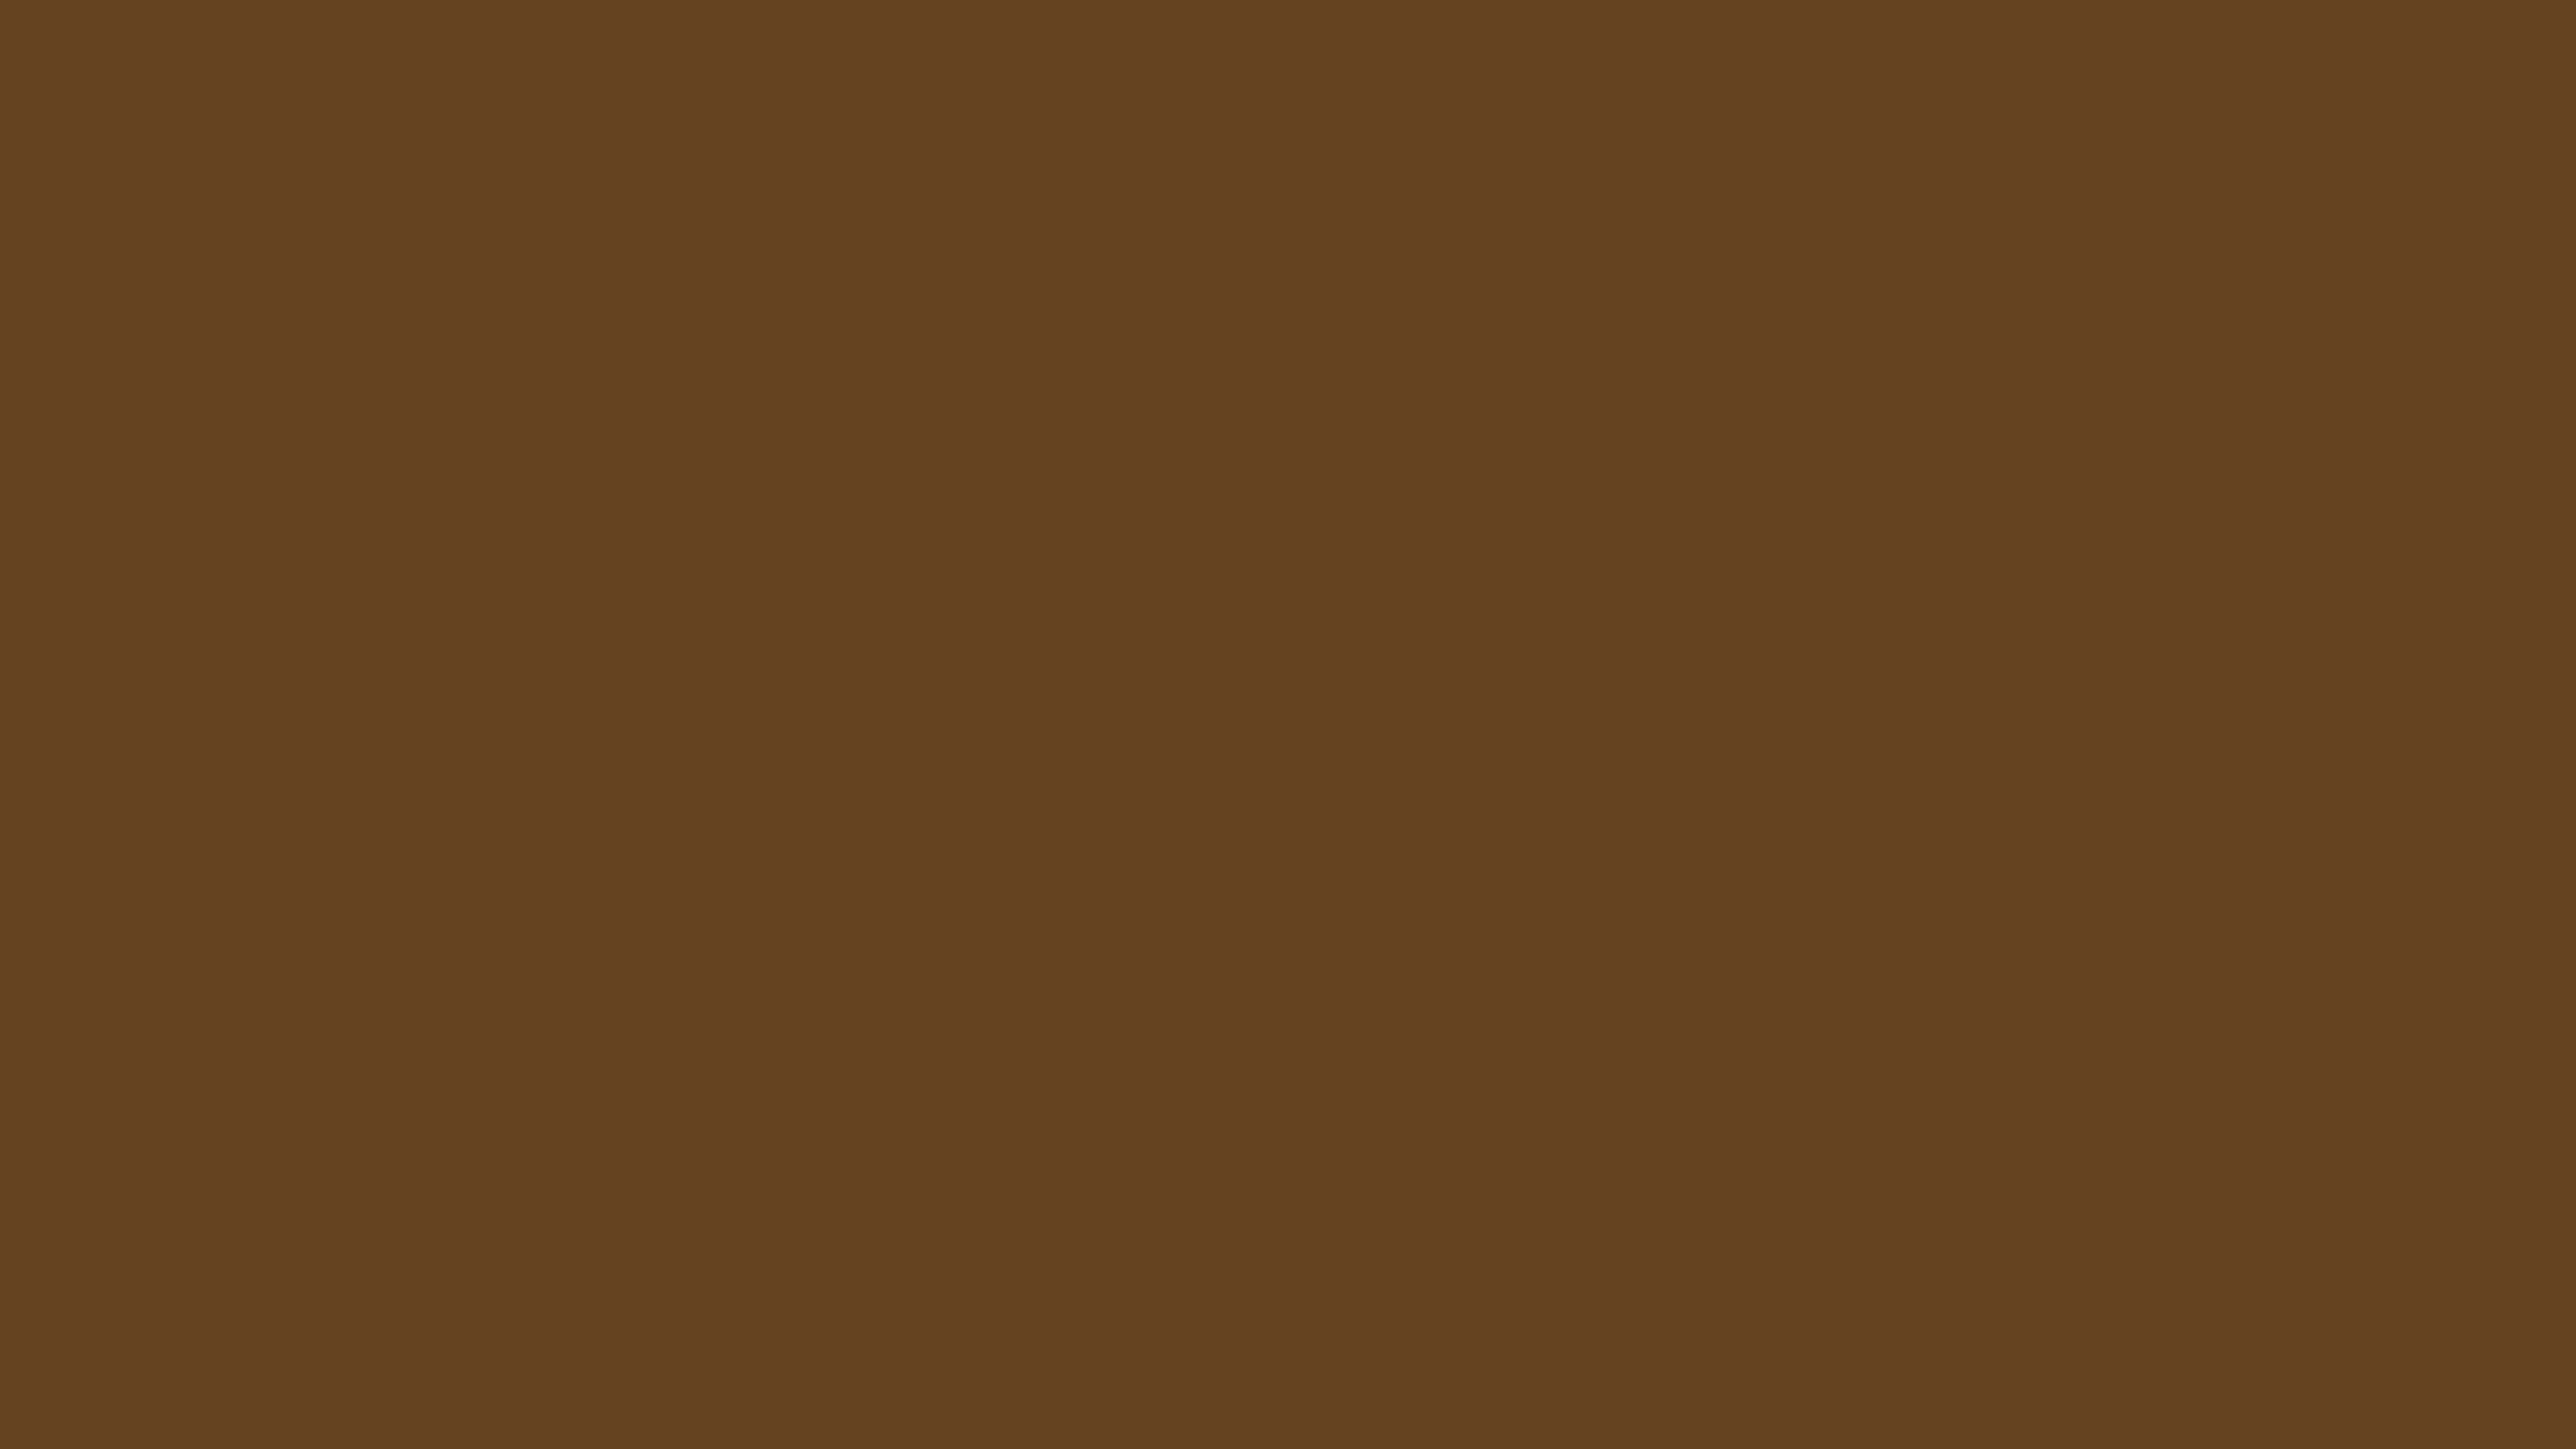 4096x2304 Dark Brown Solid Color Background